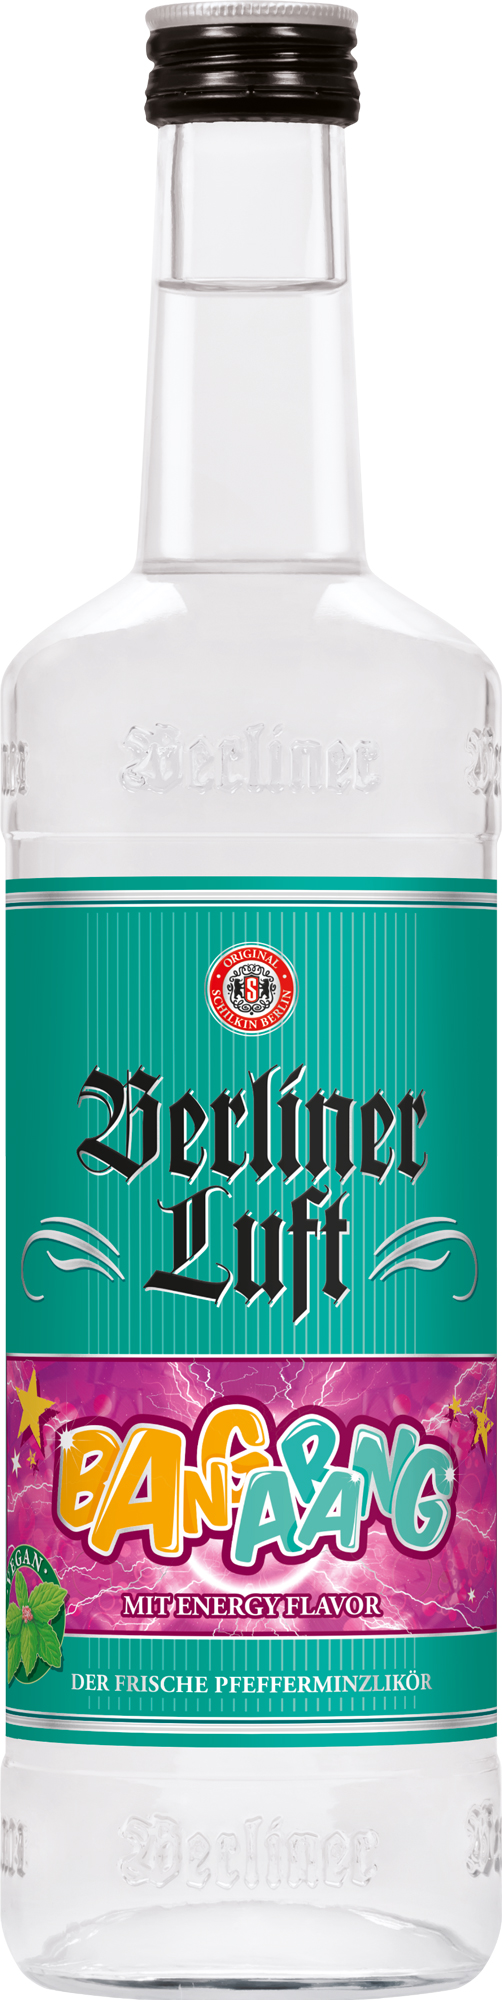 Berliner Luft  - Bangarang - Pfefferminzlikör 0,7l 18%vol.